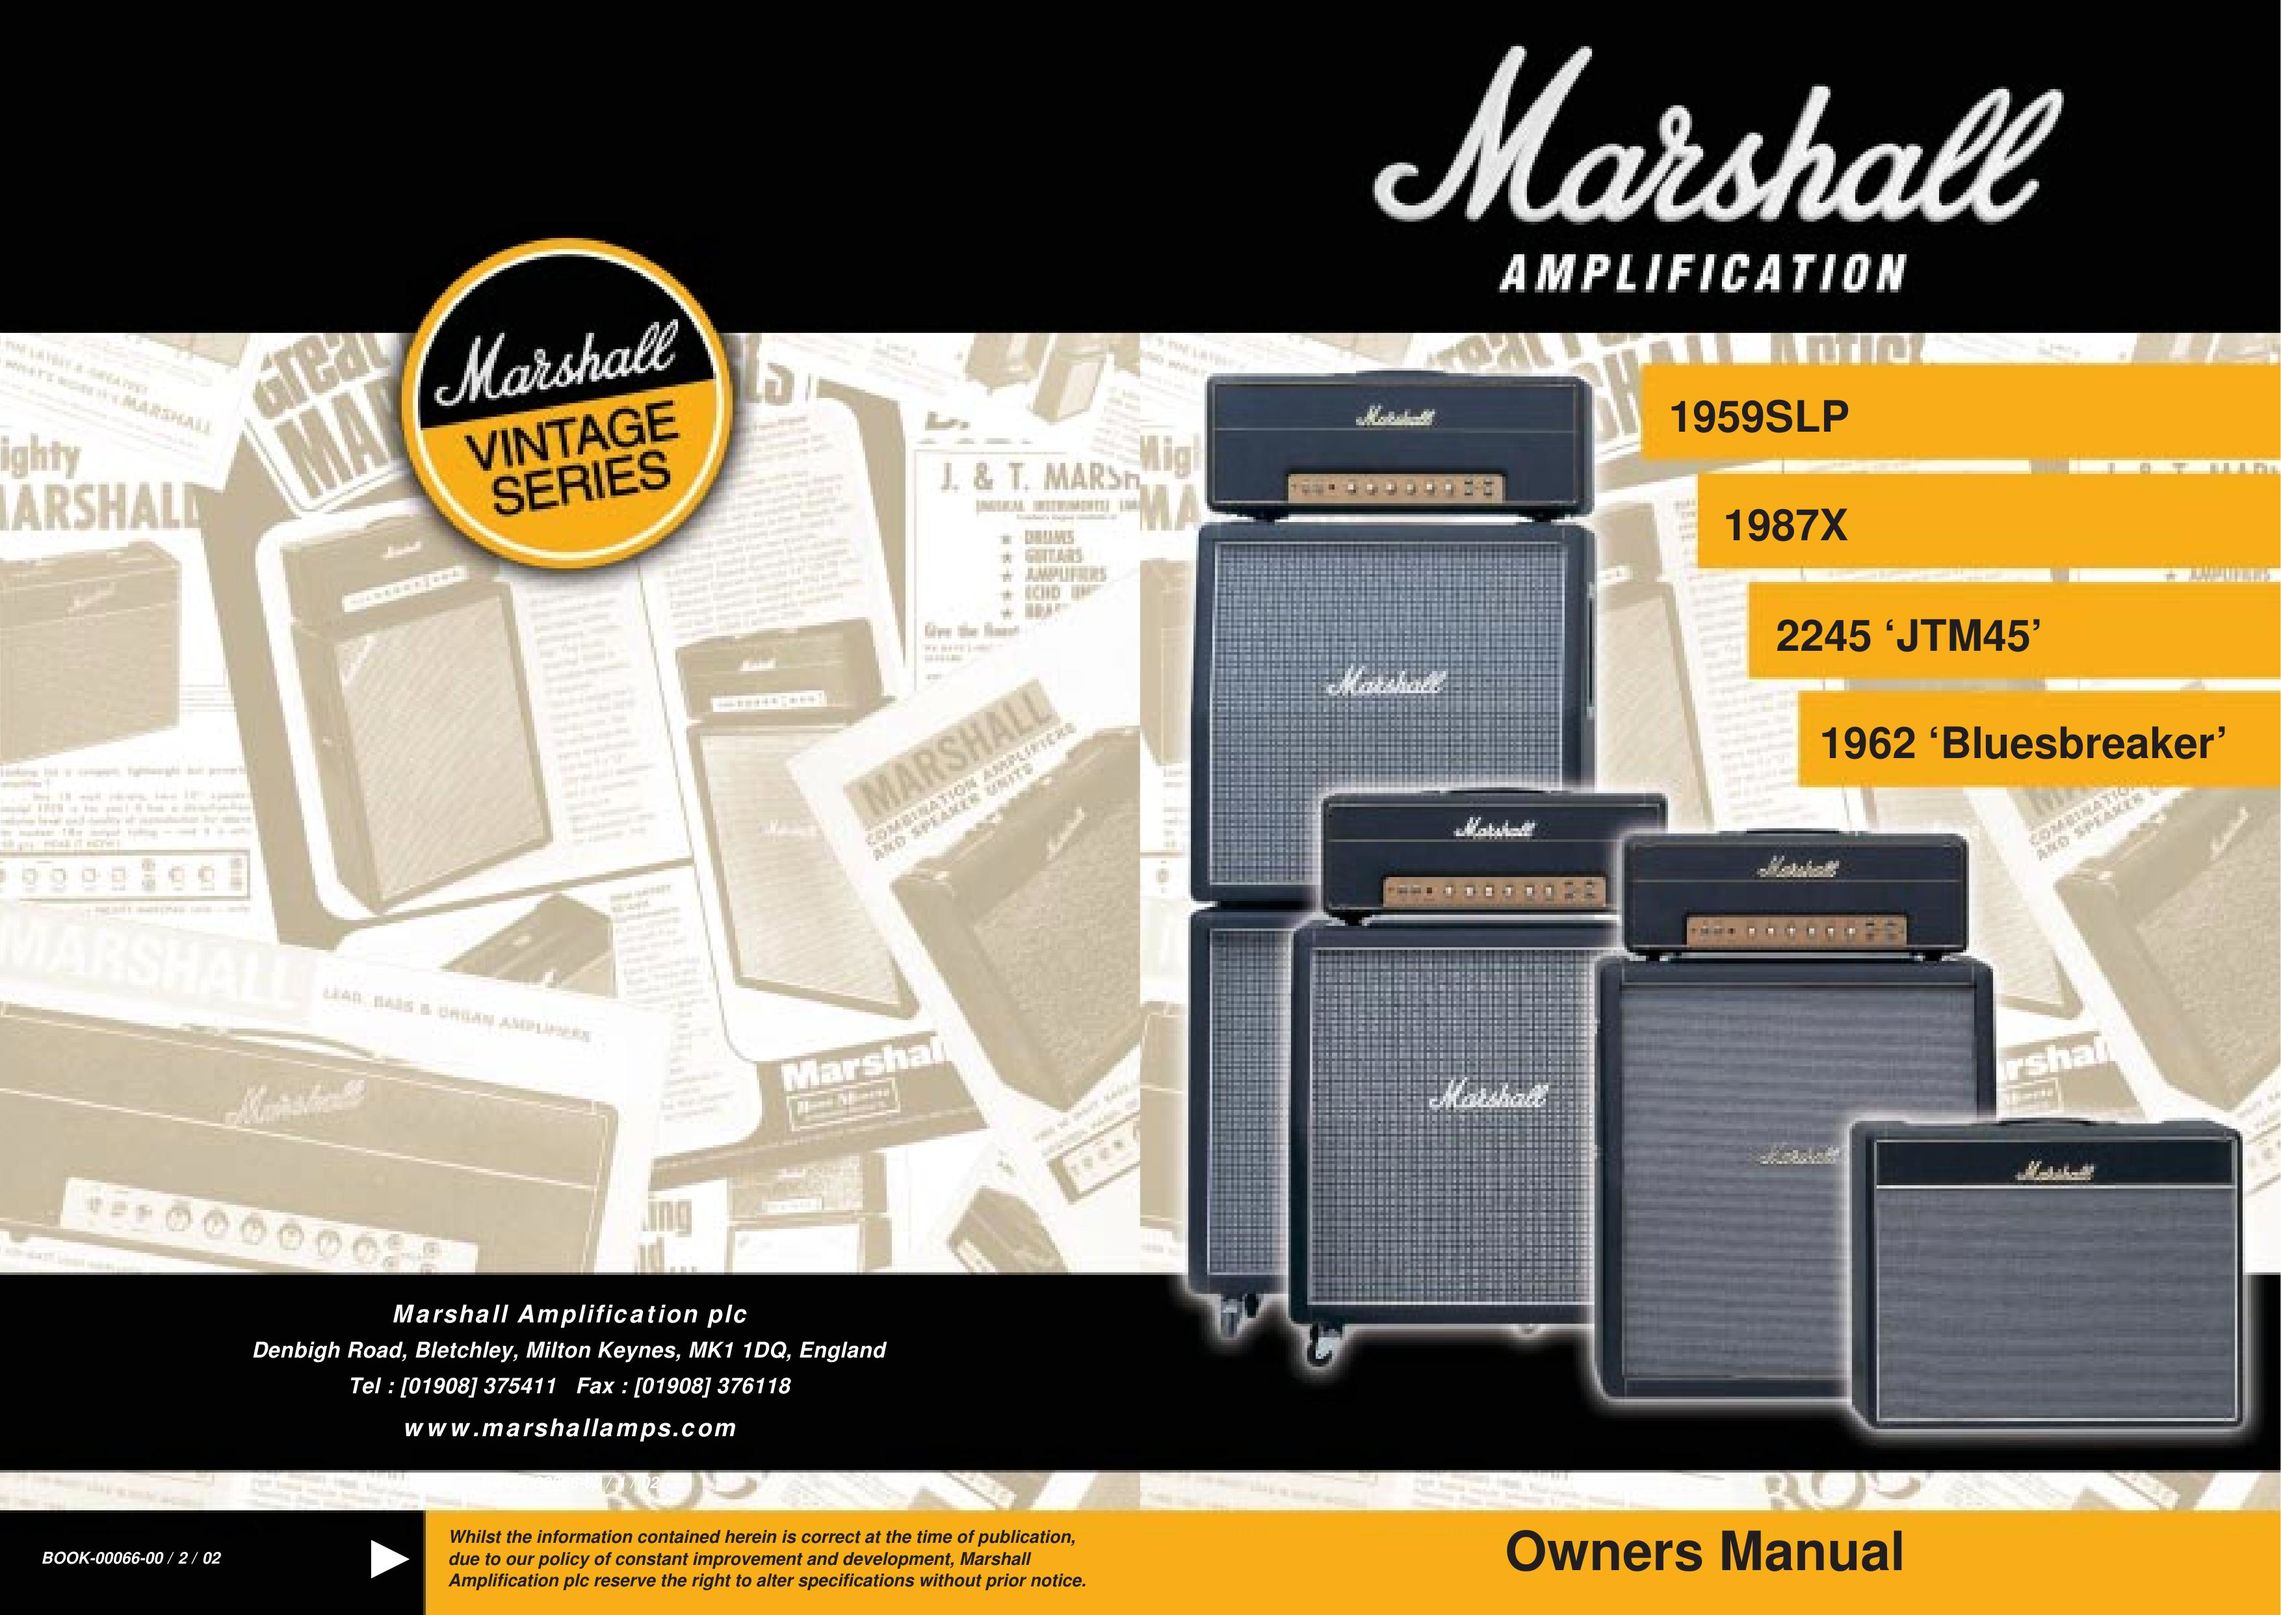 Marshall Amplification 2245 `JTM45' Stereo Amplifier User Manual